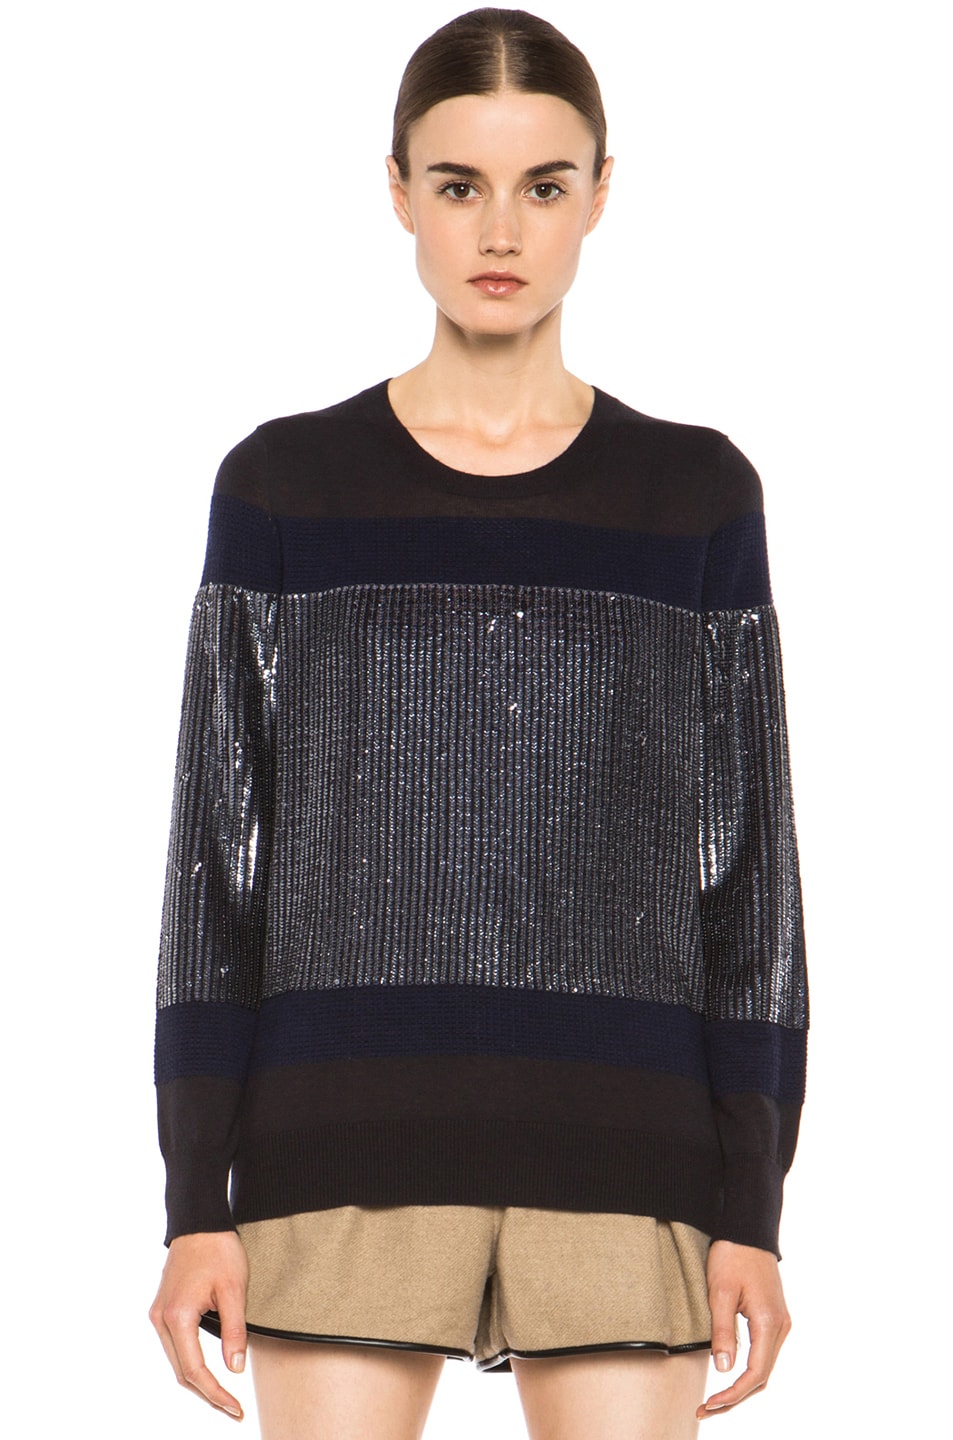 3.1 phillip lim Sequin Stripe Merino Wool Pullover in Charcoal | FWRD